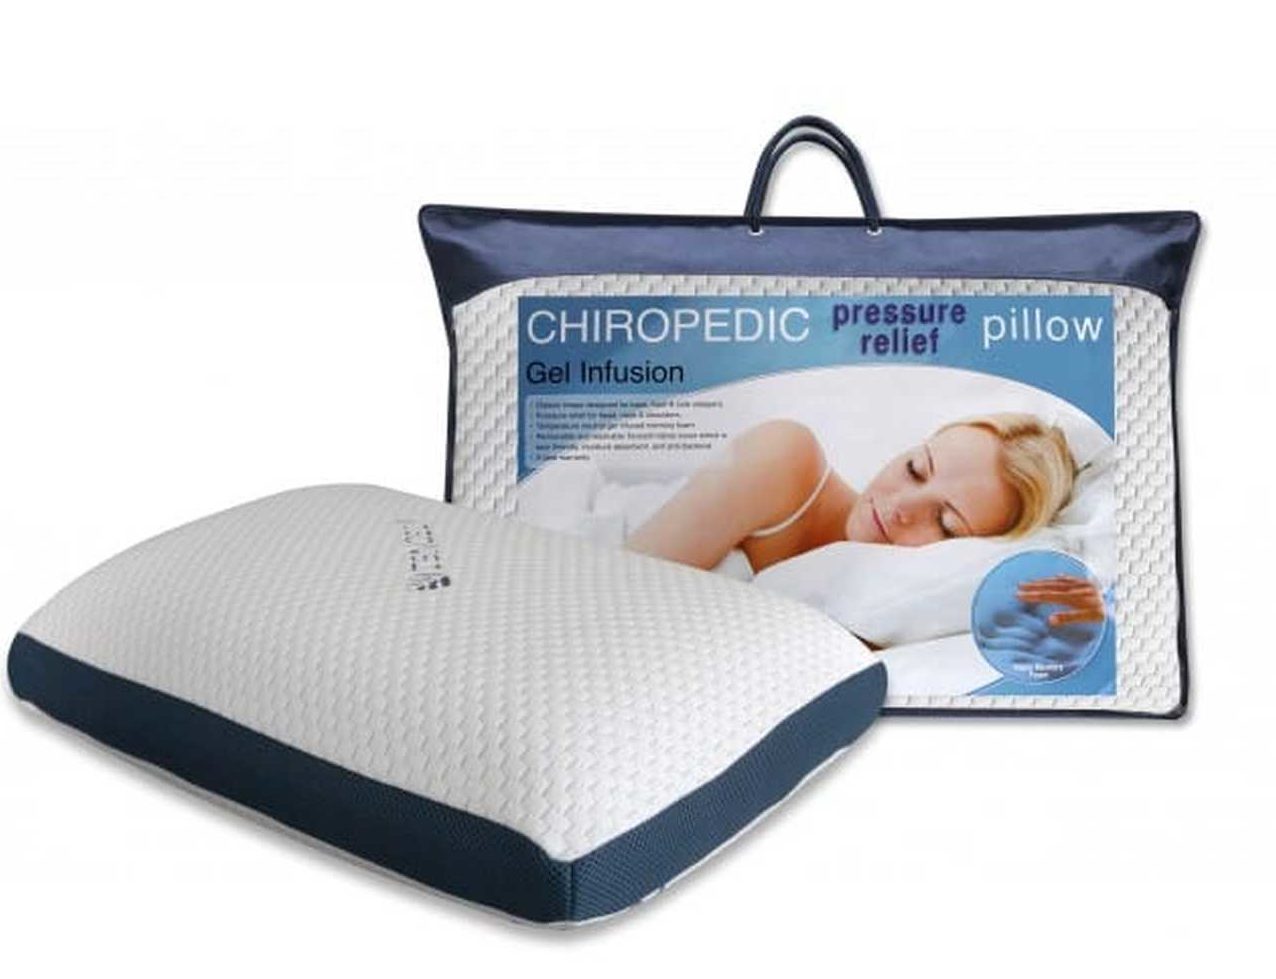 Chiropedic Pressure Relief Pillow Gel Infusion